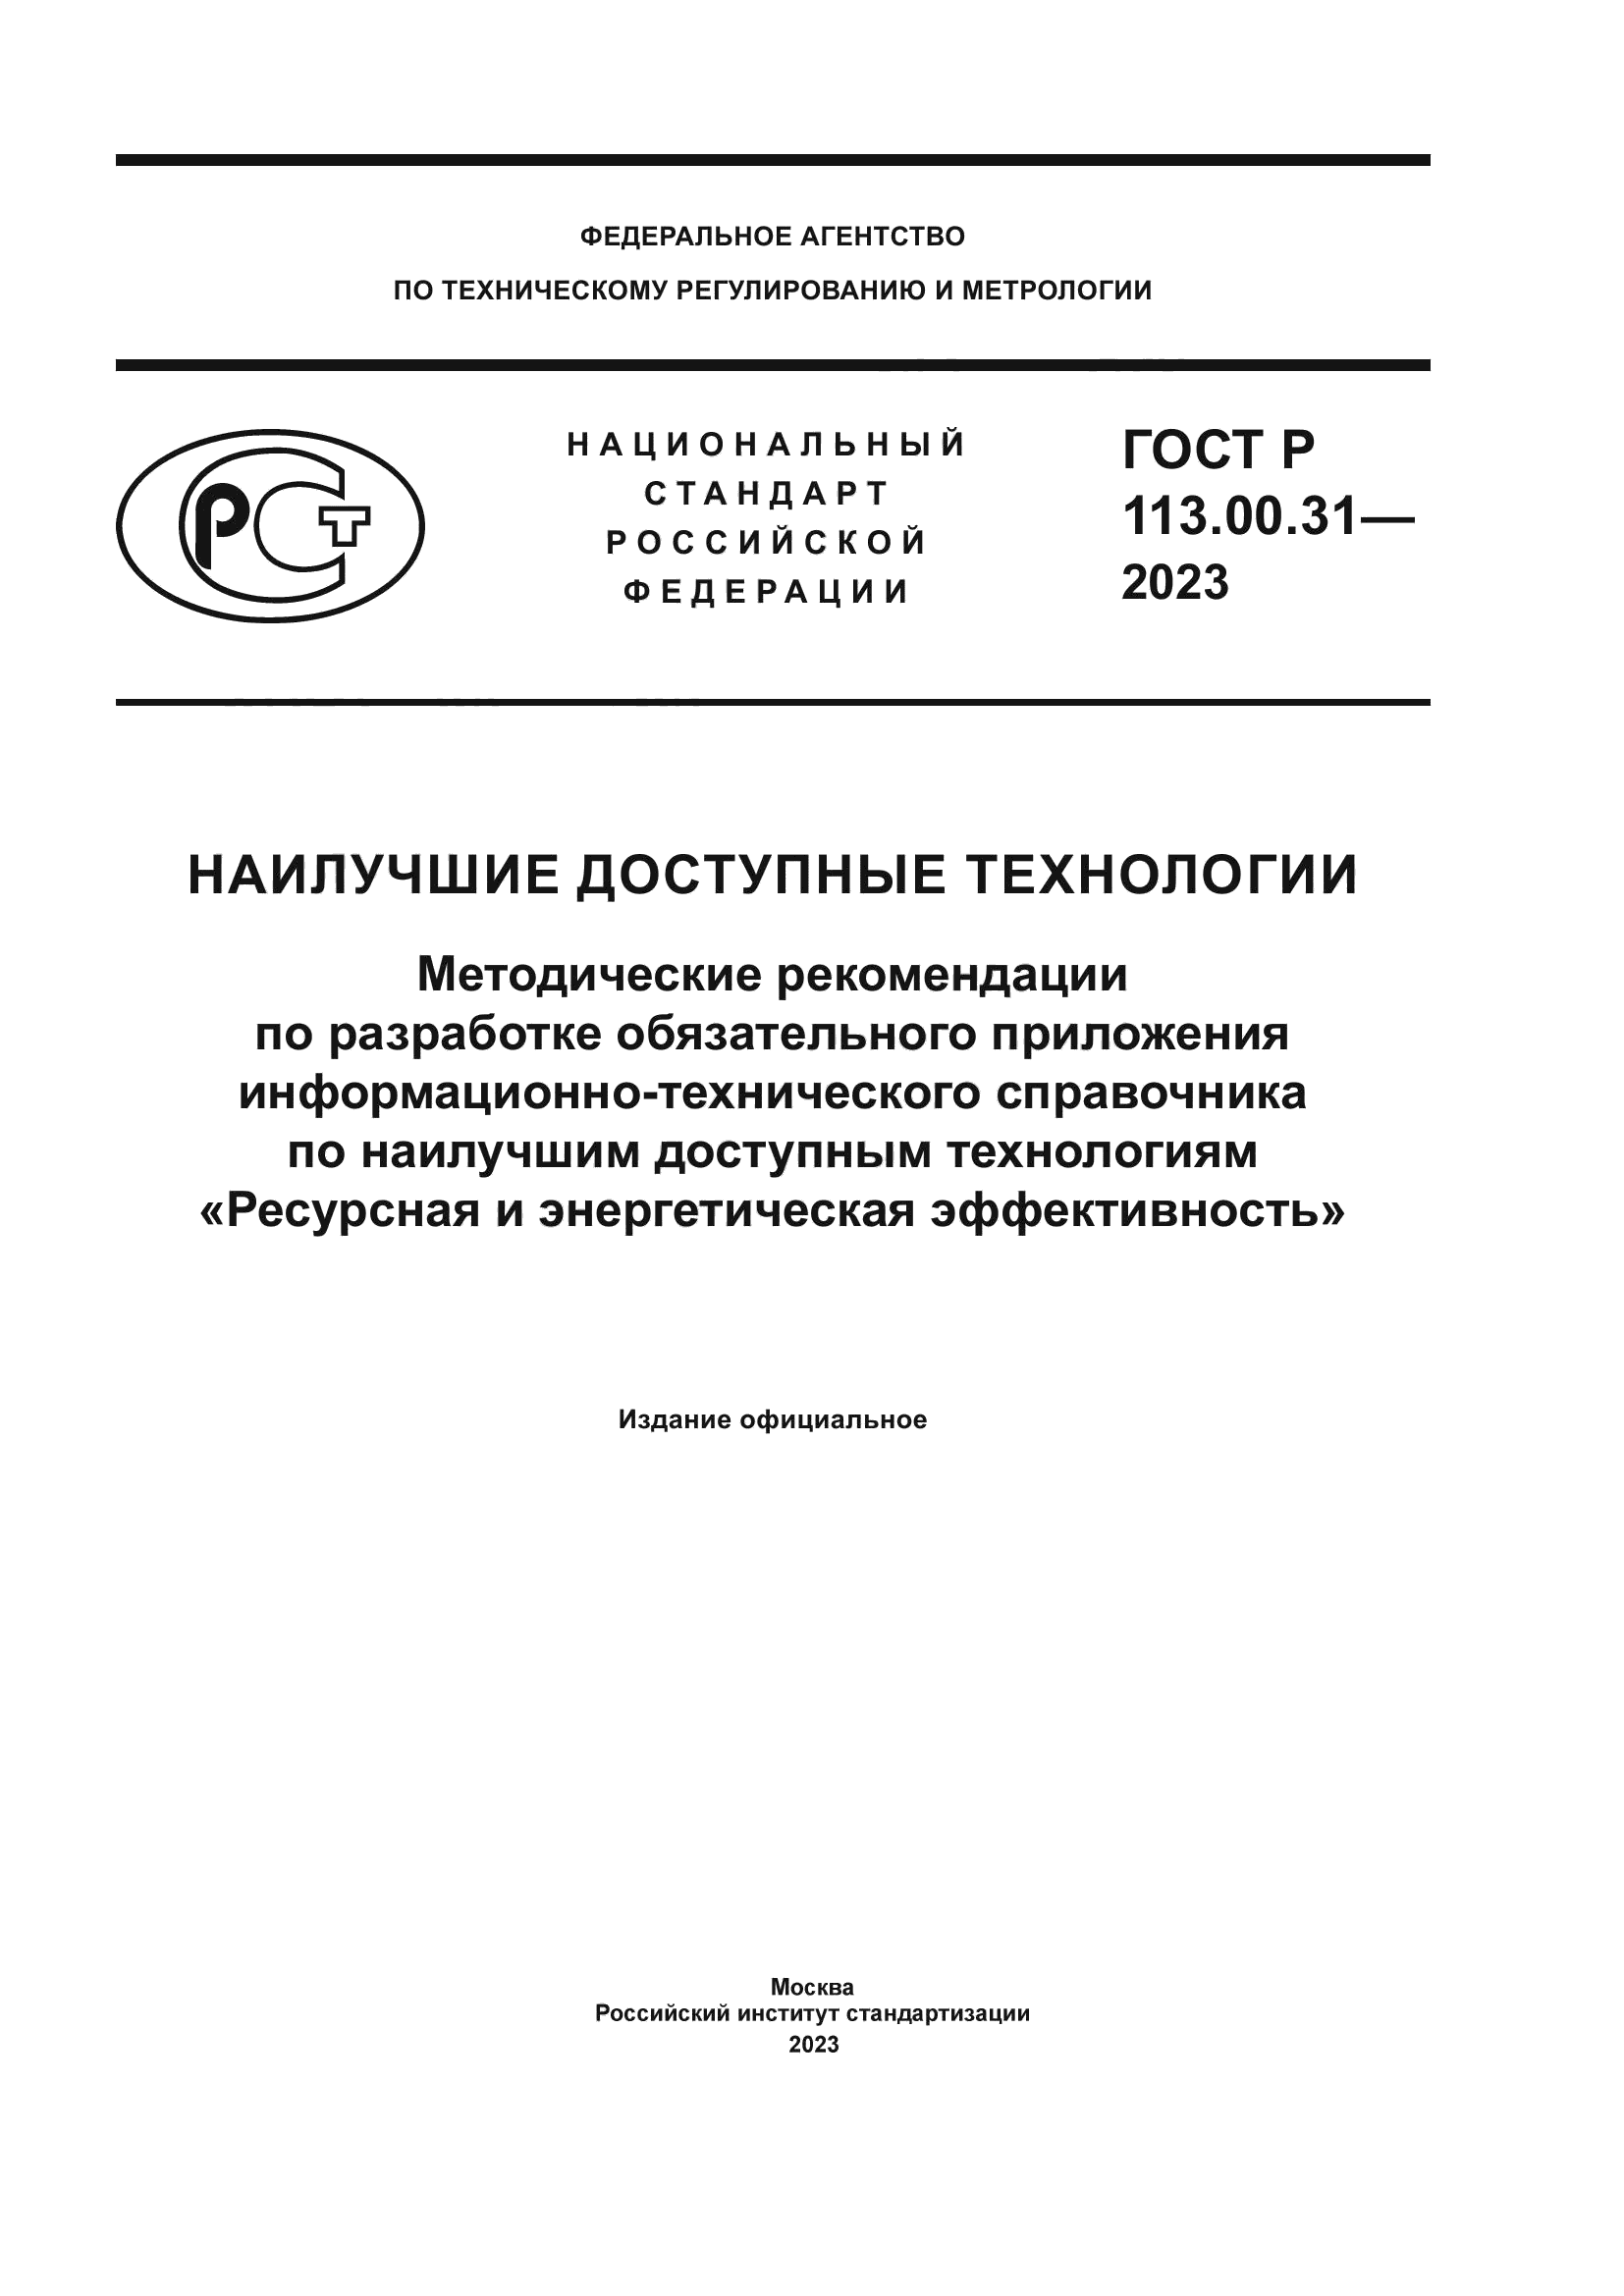 ГОСТ Р 113.00.31-2023